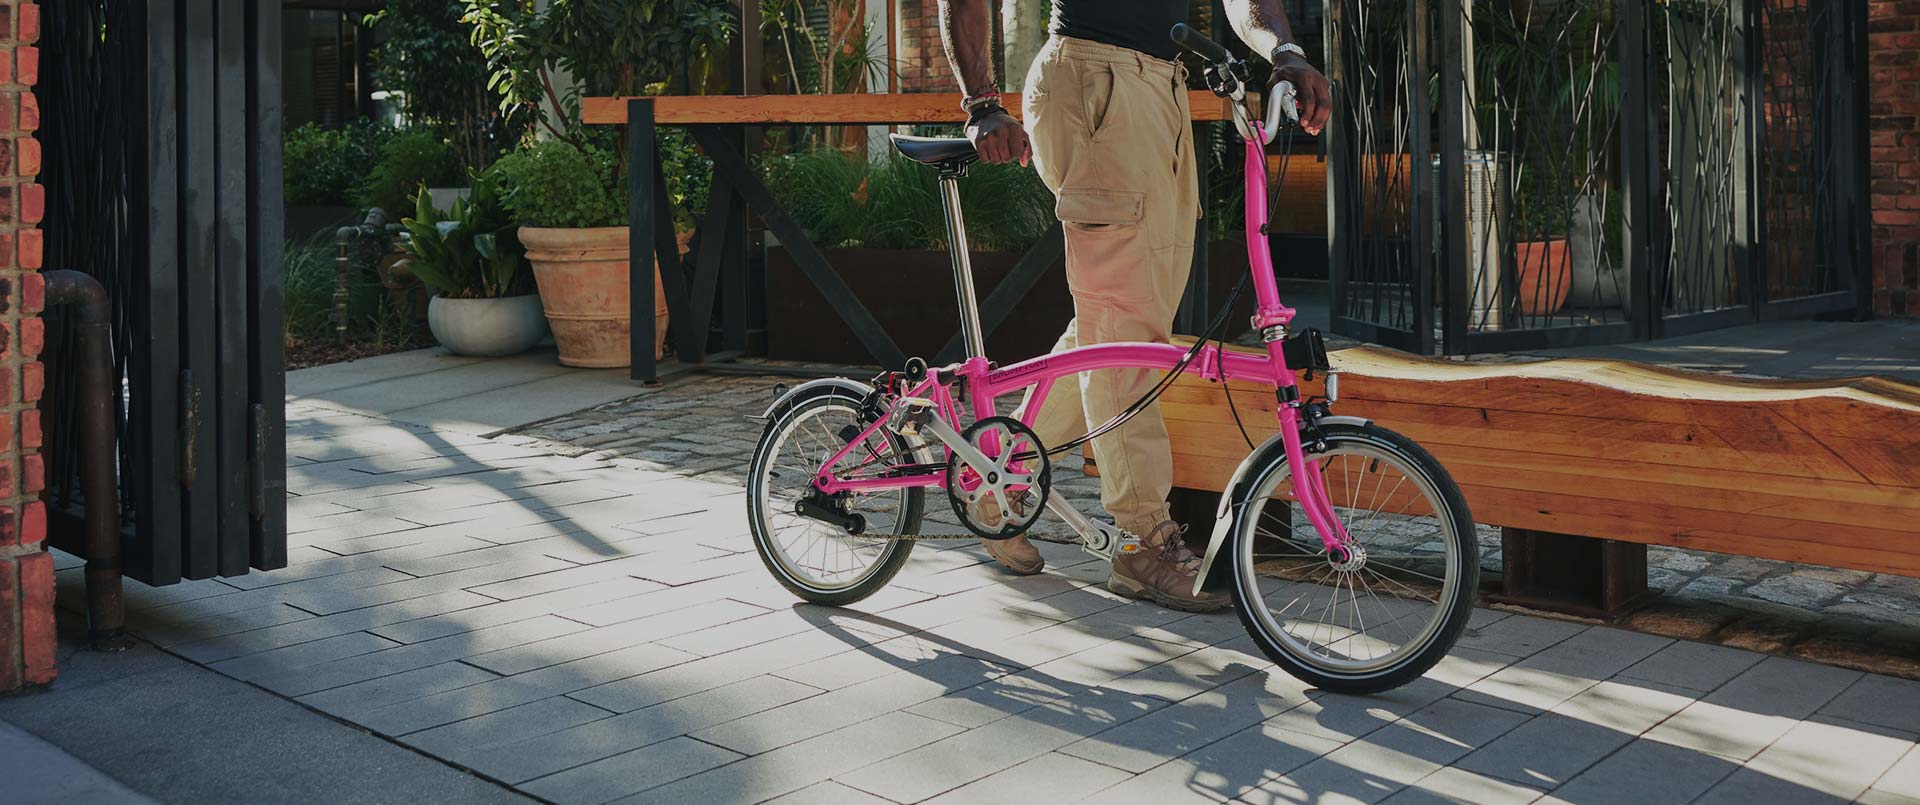 Hot Pink Archive bike being pushed along sidewalk